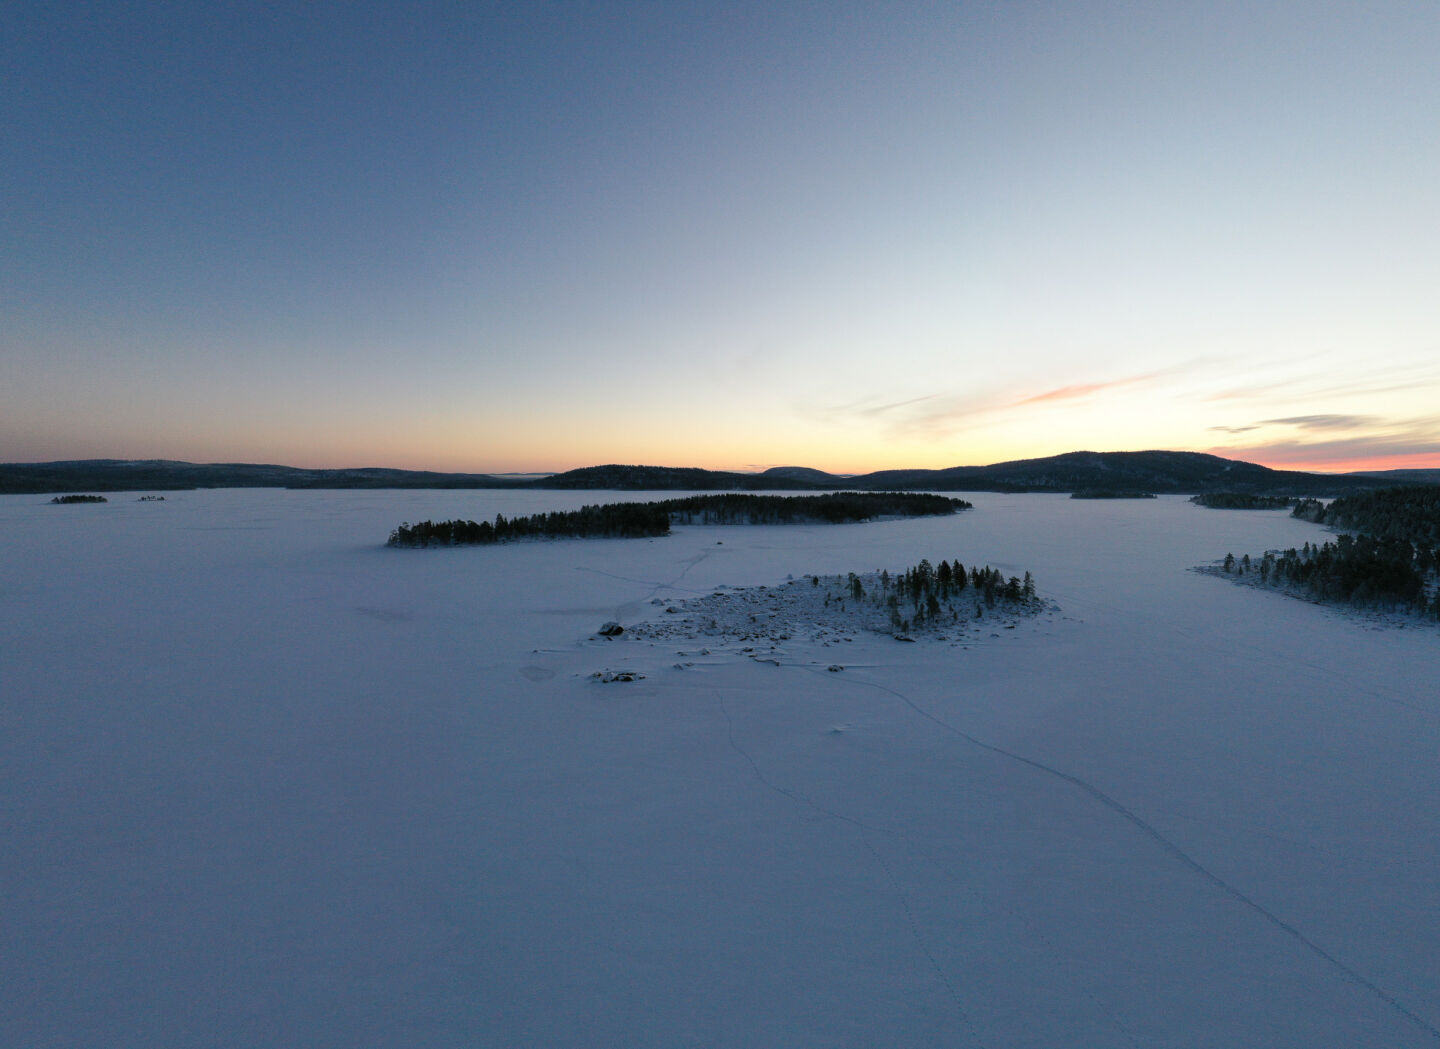 Sunrise over the frozen winter lake in Inari, a film location in Finnish Lapland